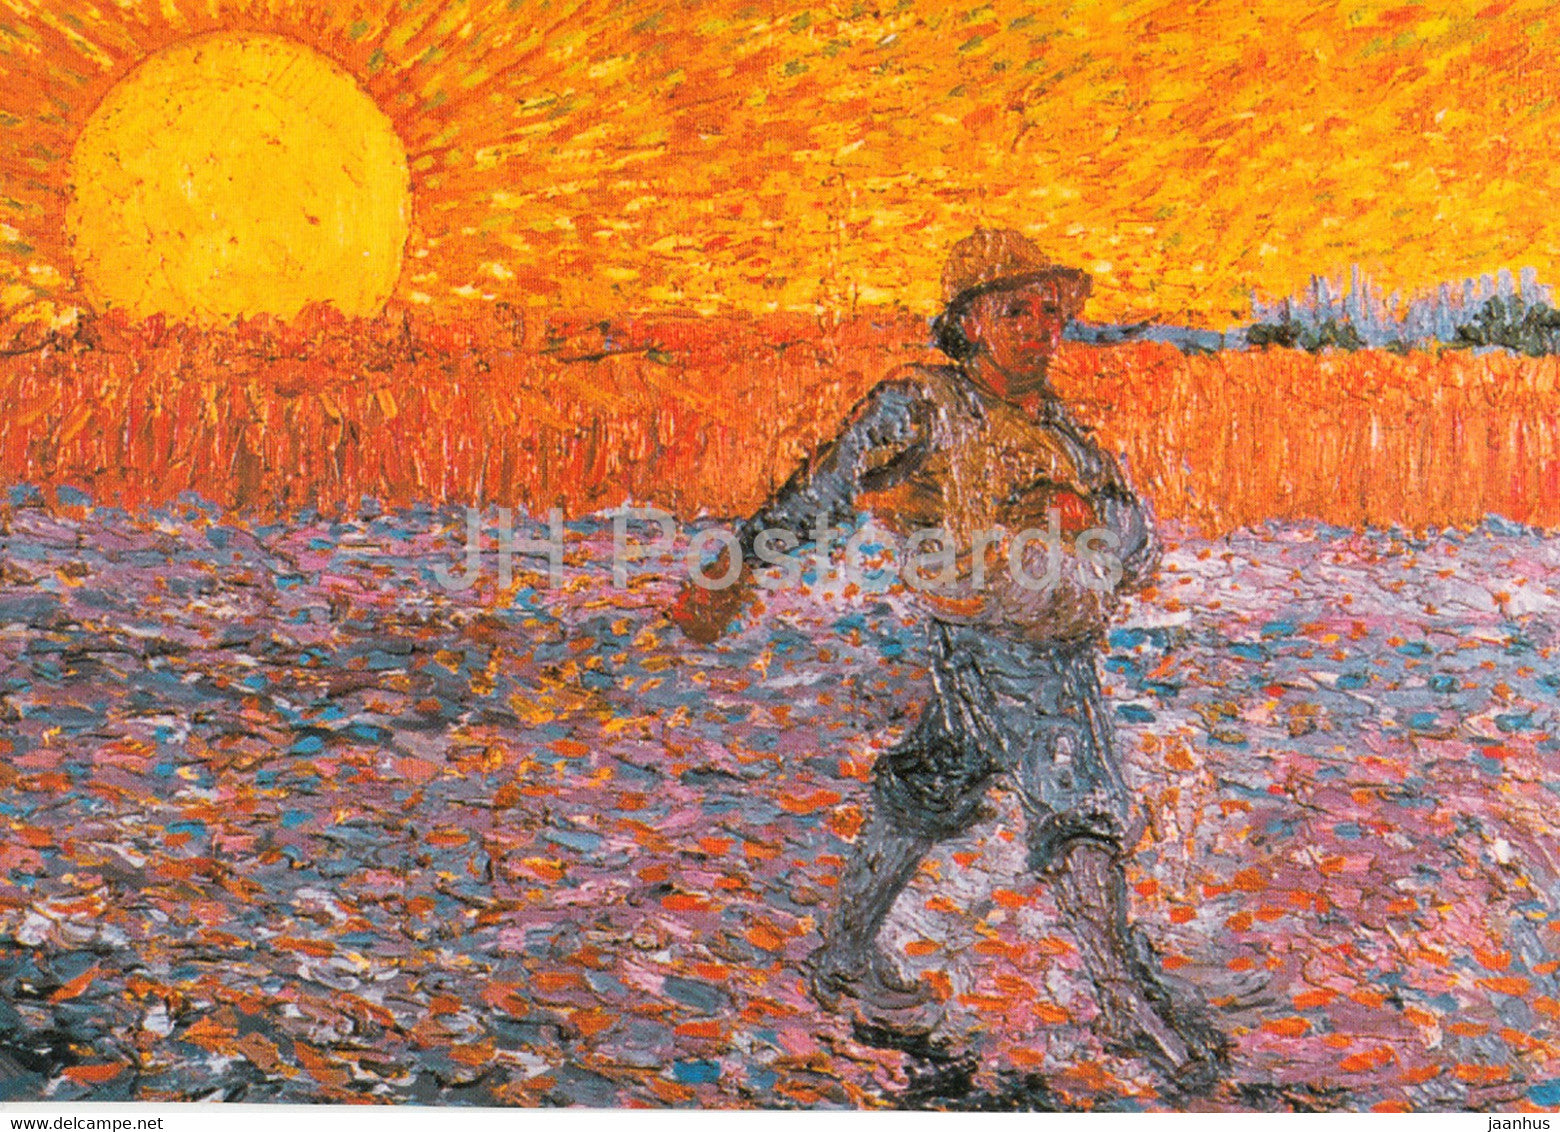 painting by Vincent van Gogh - Samann bei untergehende Sonne - Sower by Sun going down - Dutch art - Germany - unused - JH Postcards